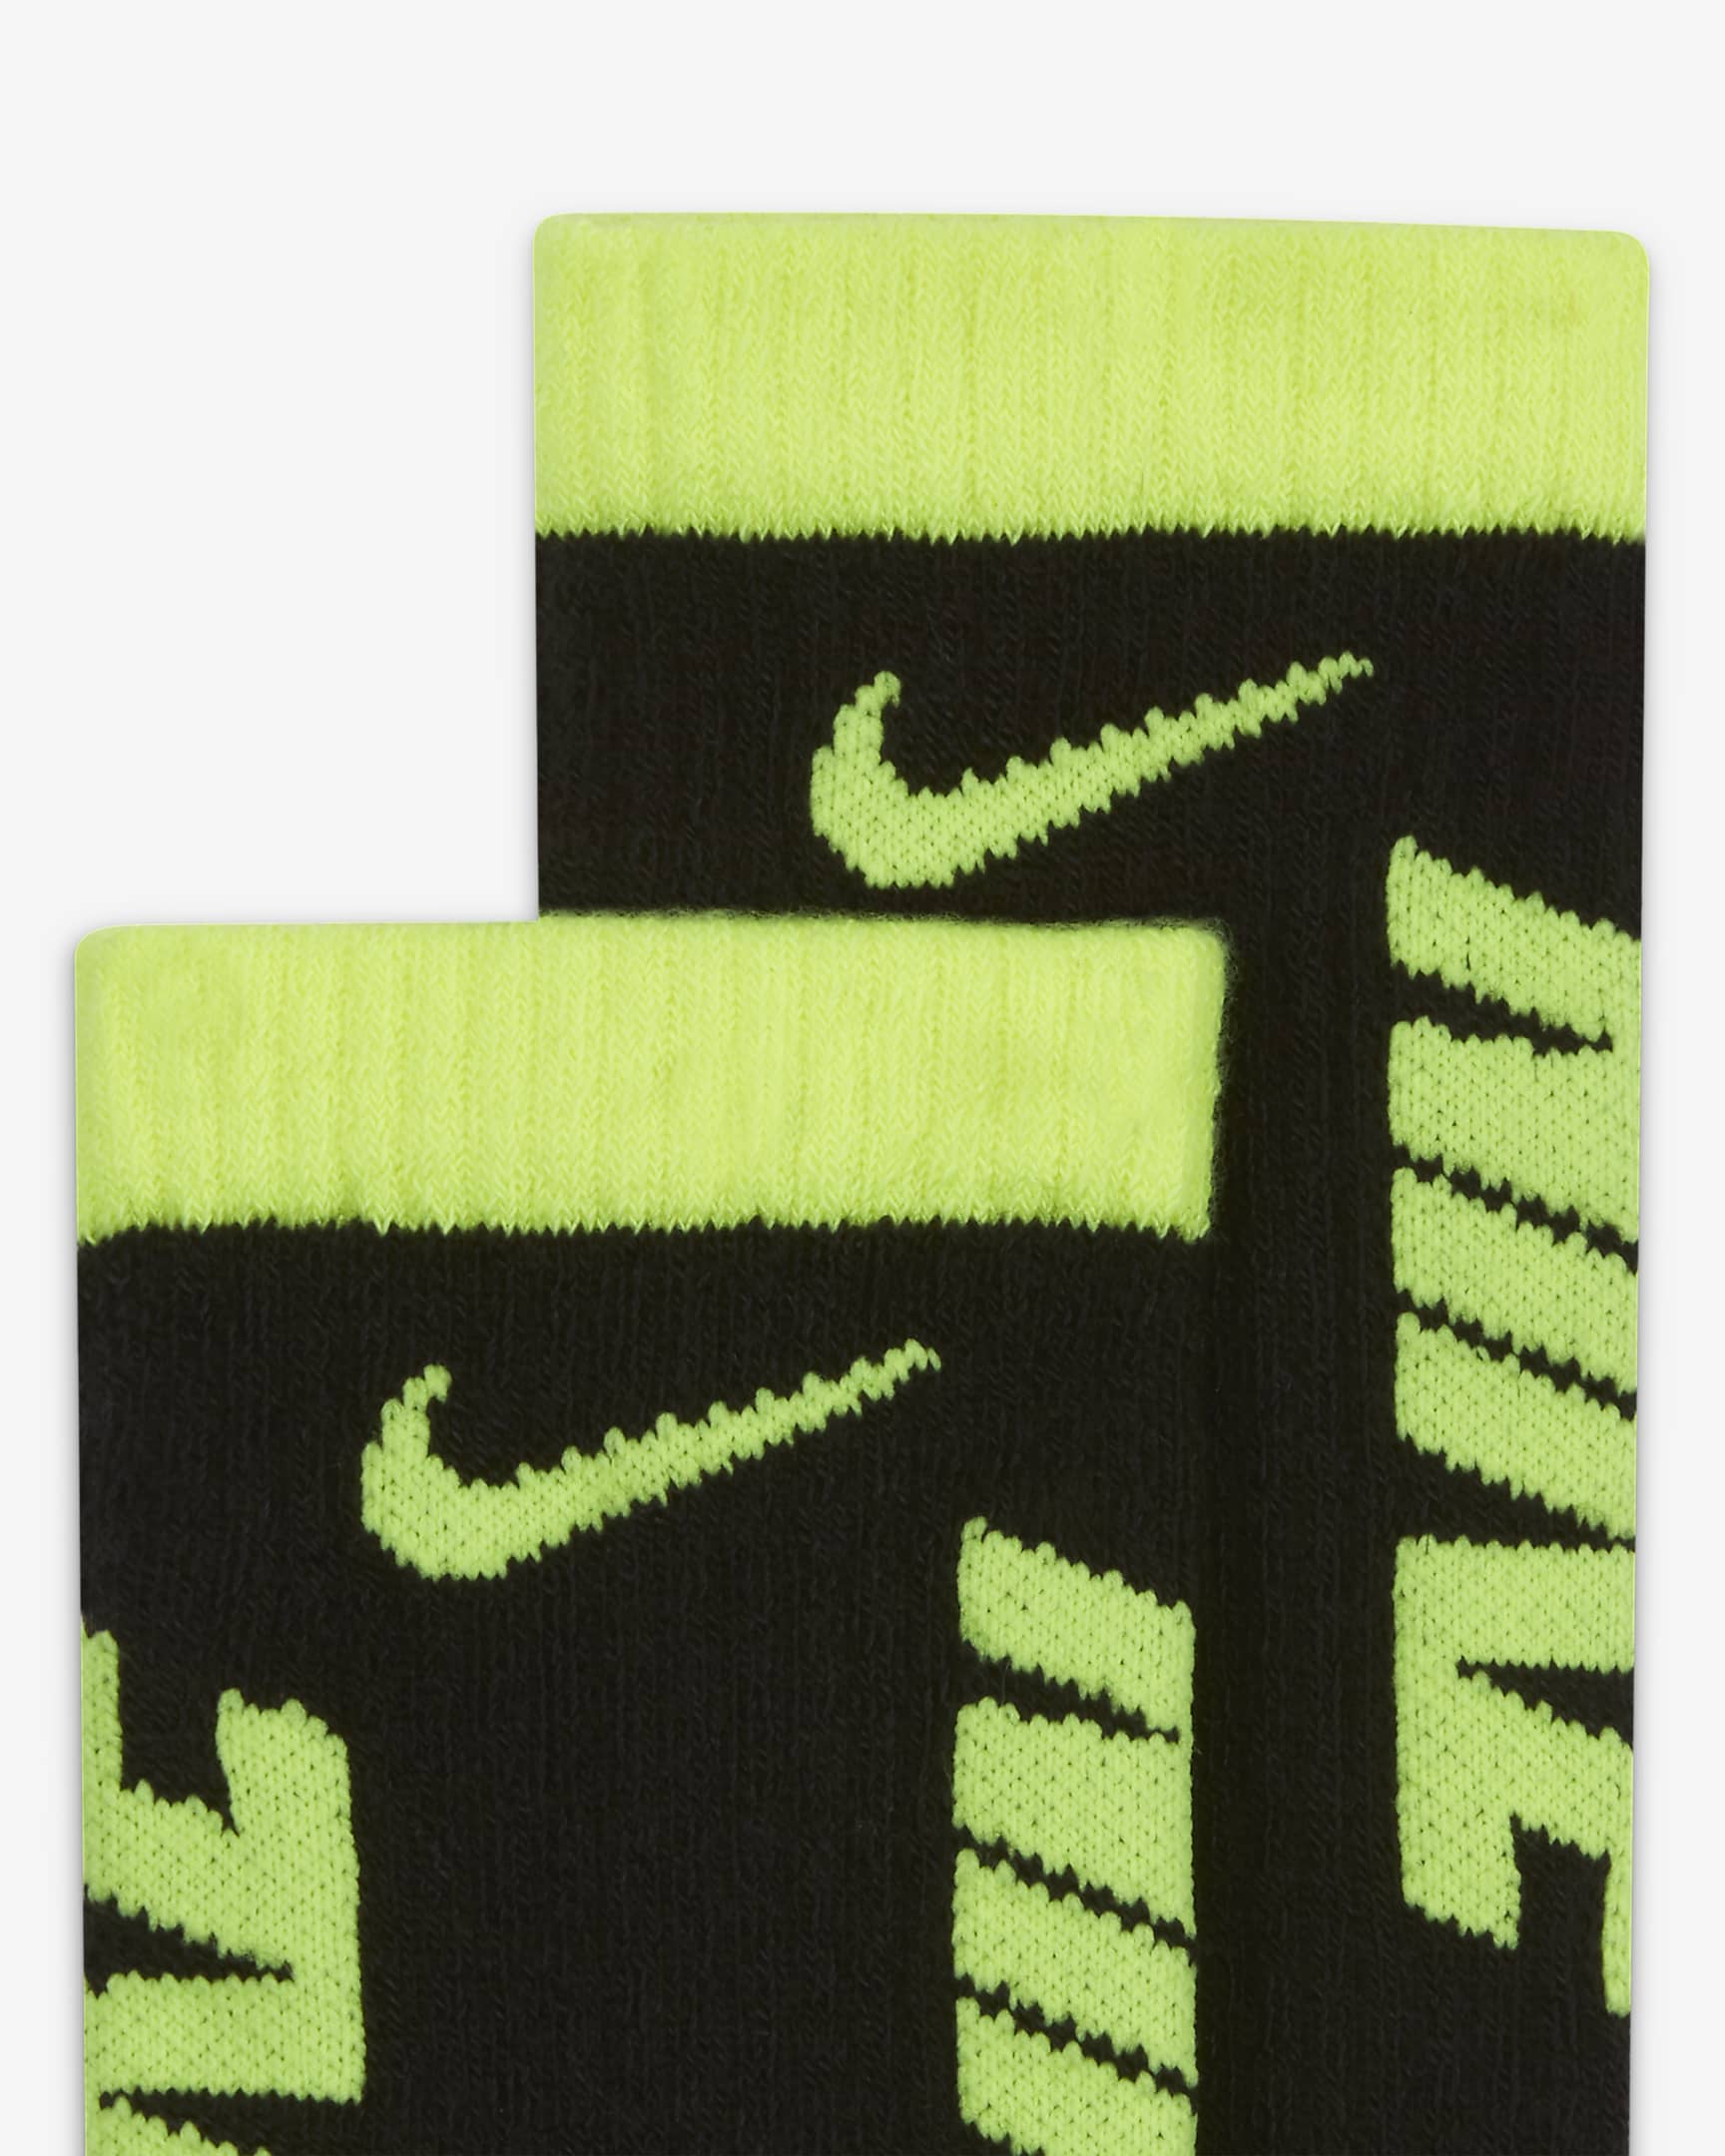 Nike Everyday Kids' Cushioned Crew Socks (3 Pairs). Nike ID